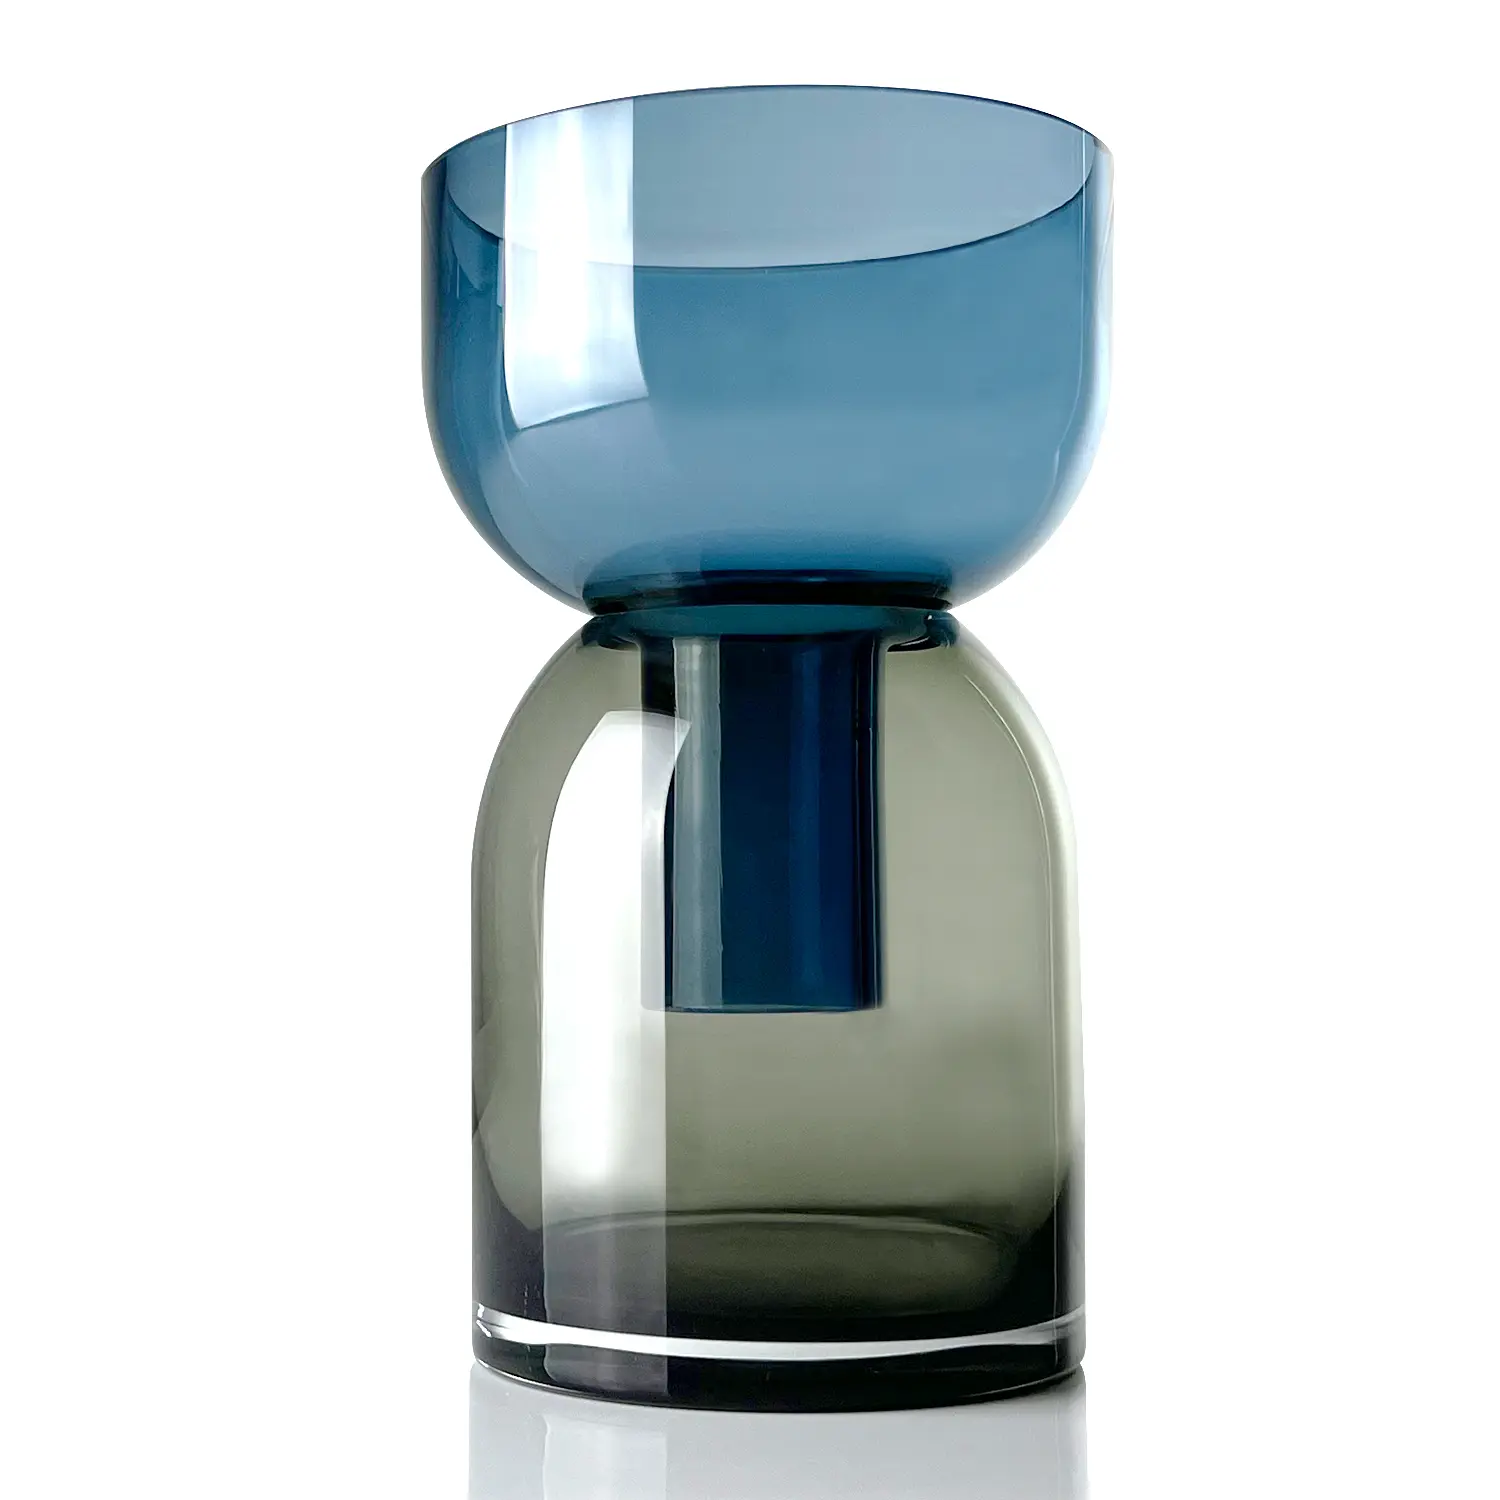 Flip Vase Blue and Gray - Large